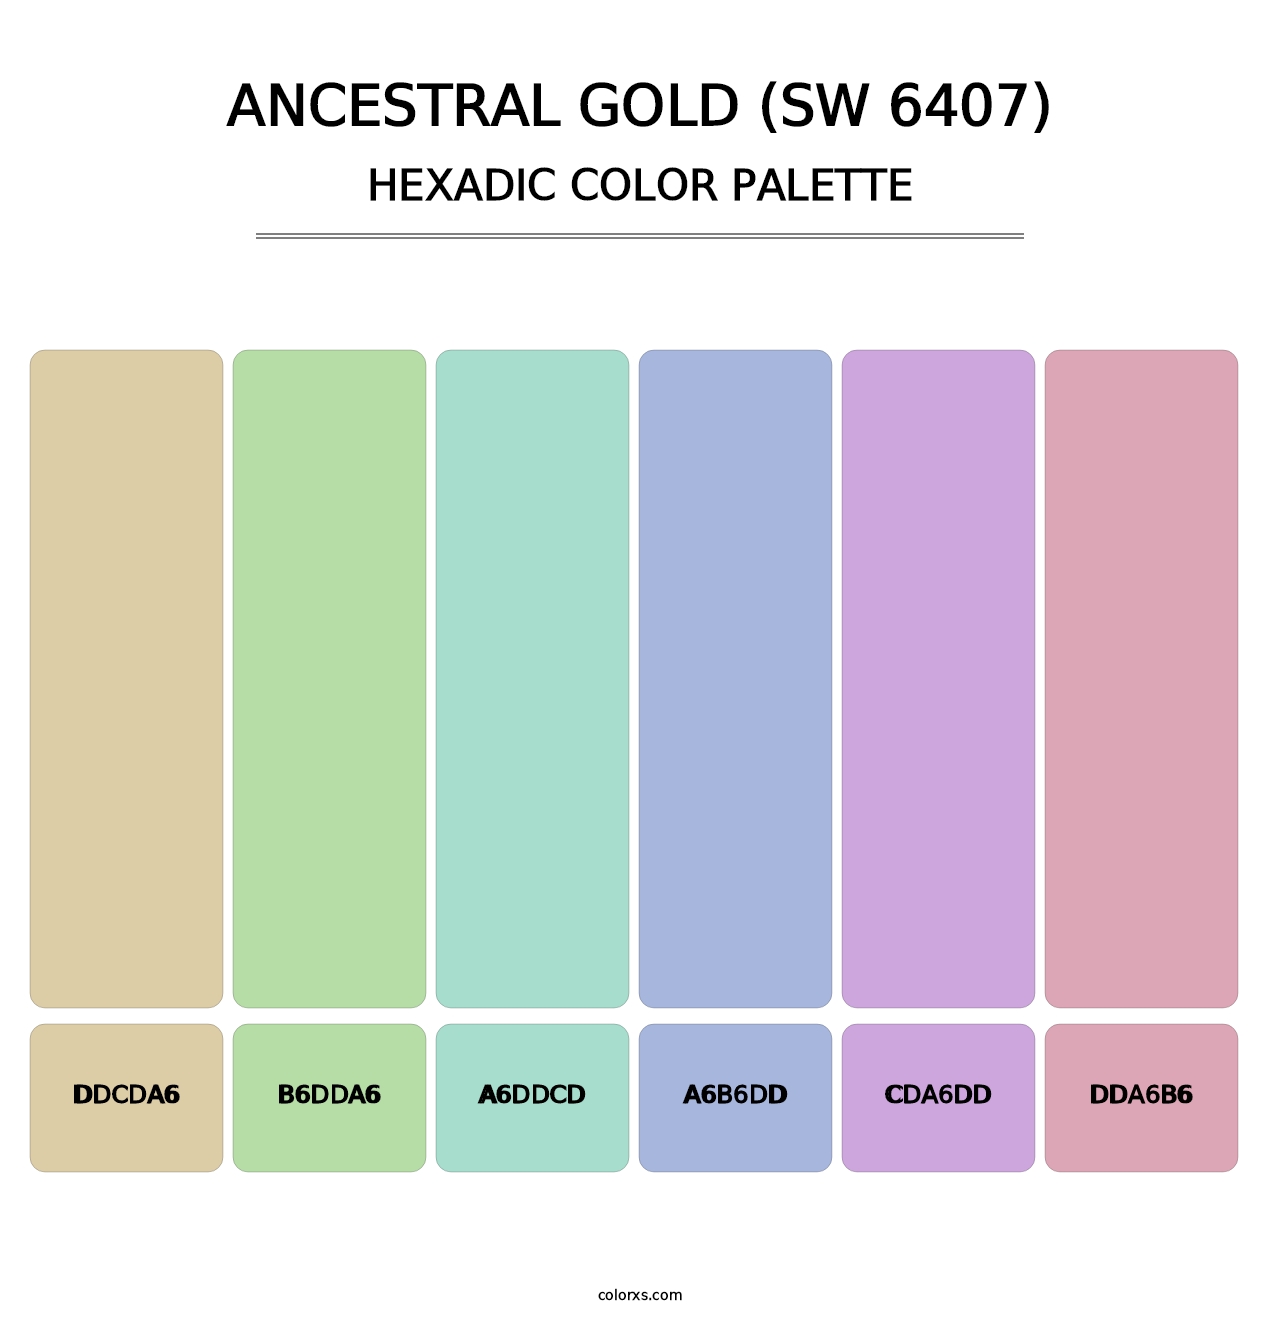 Ancestral Gold (SW 6407) - Hexadic Color Palette